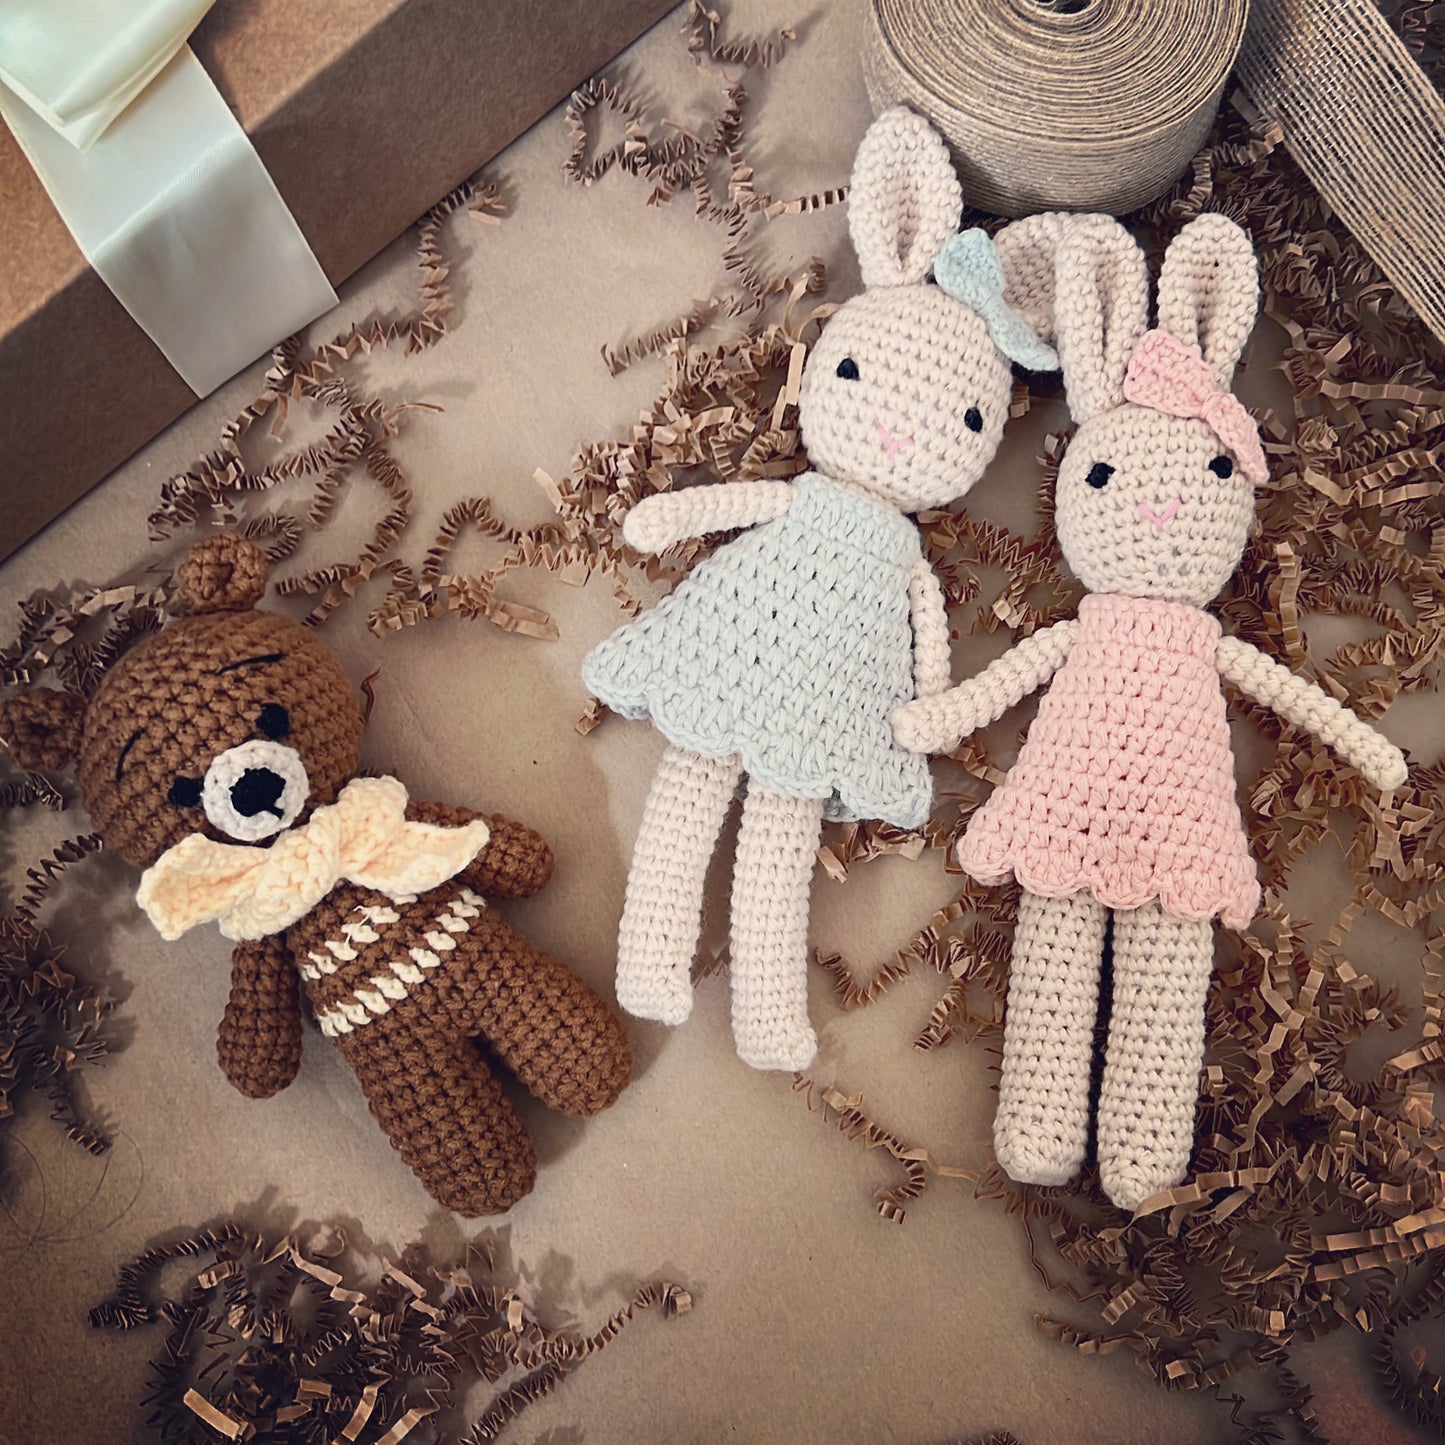 Soft and Cuddly Organic Cotton Handmade Crochet Baby Stuffed Animal